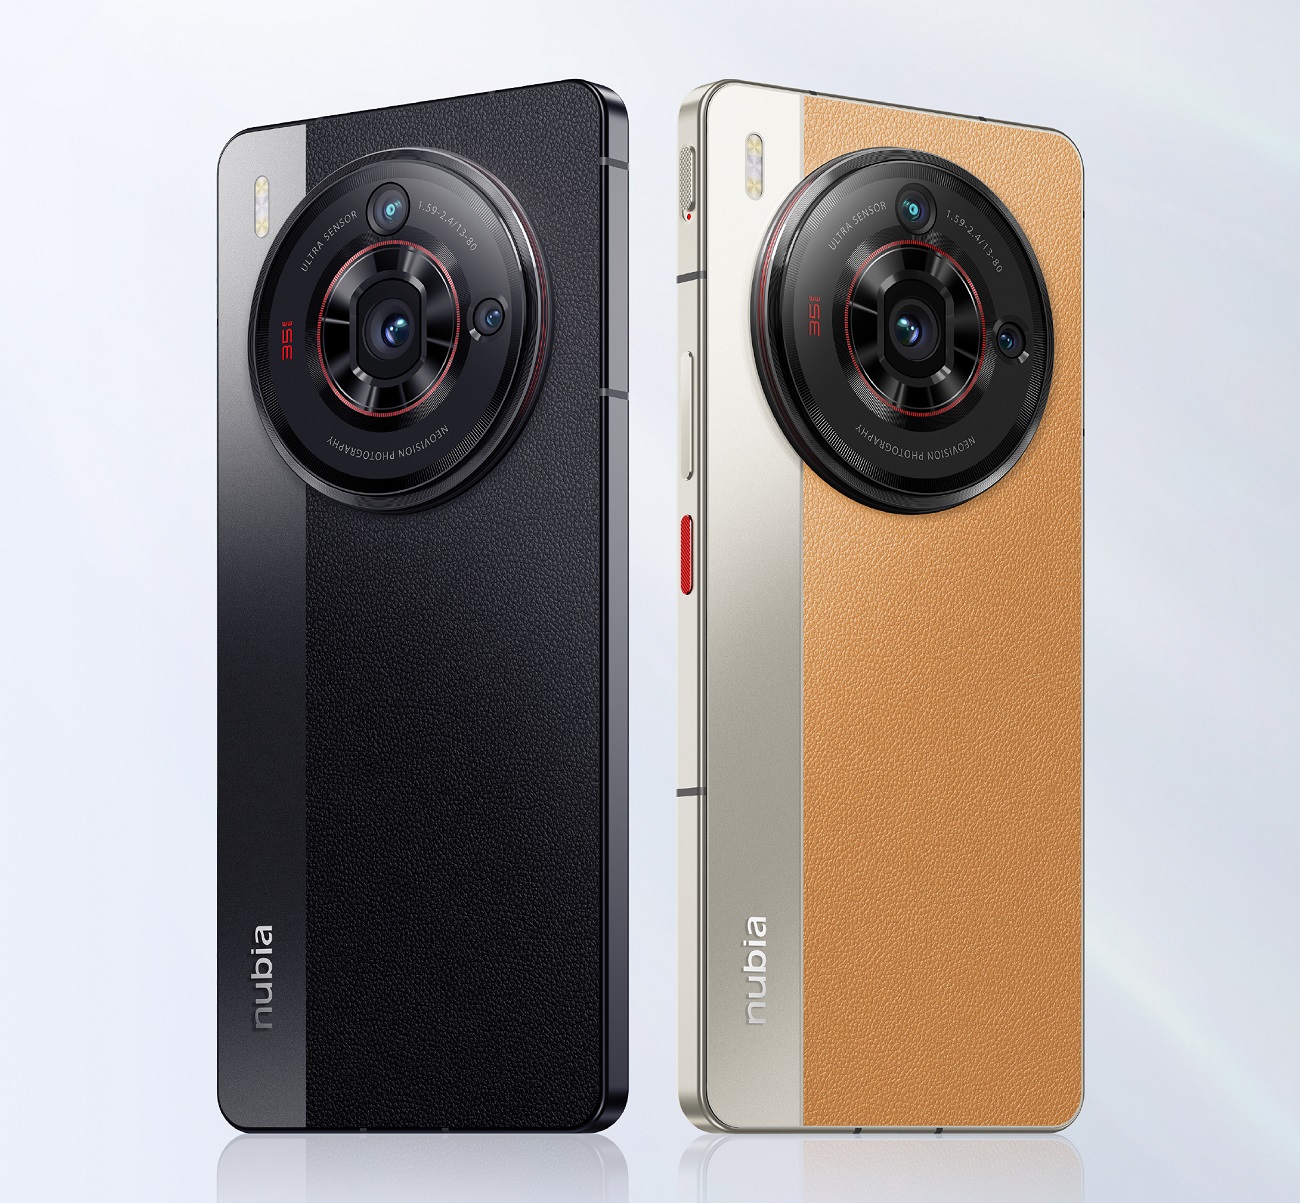 смартфон Nubia Z50S Pro